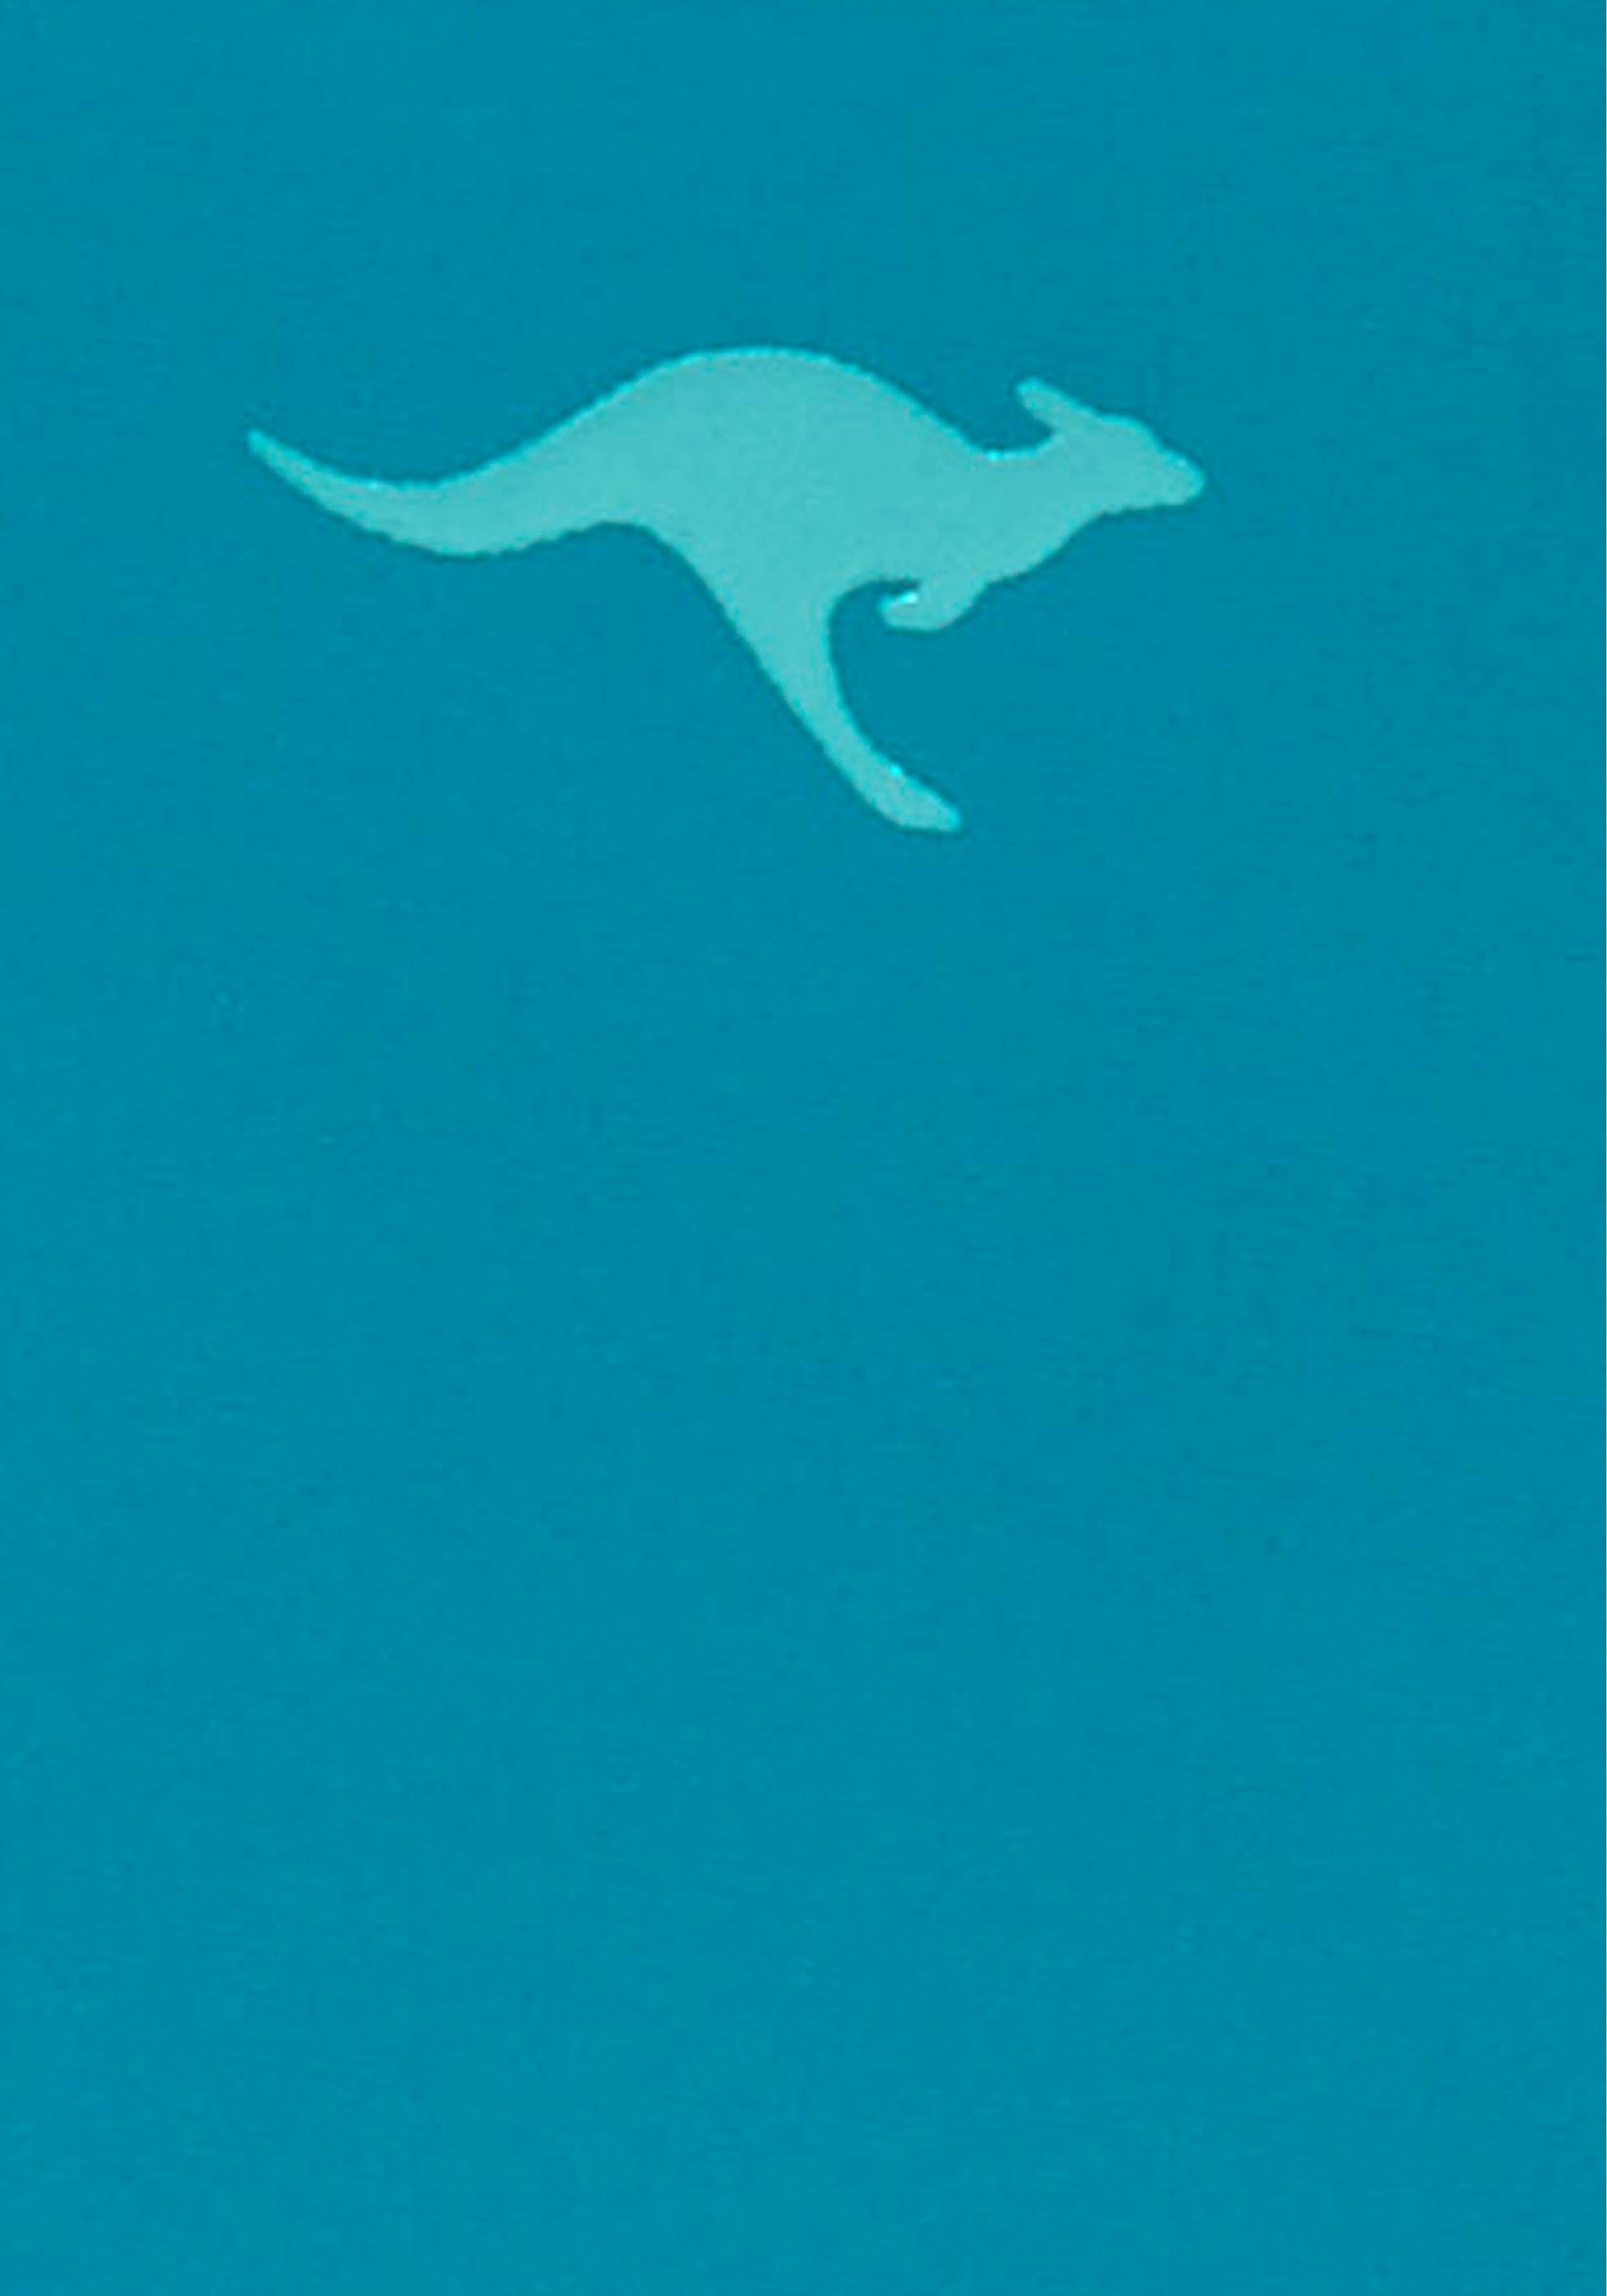 KangaROOS Badeanzug im Farbmix türkis-blau sportlichen